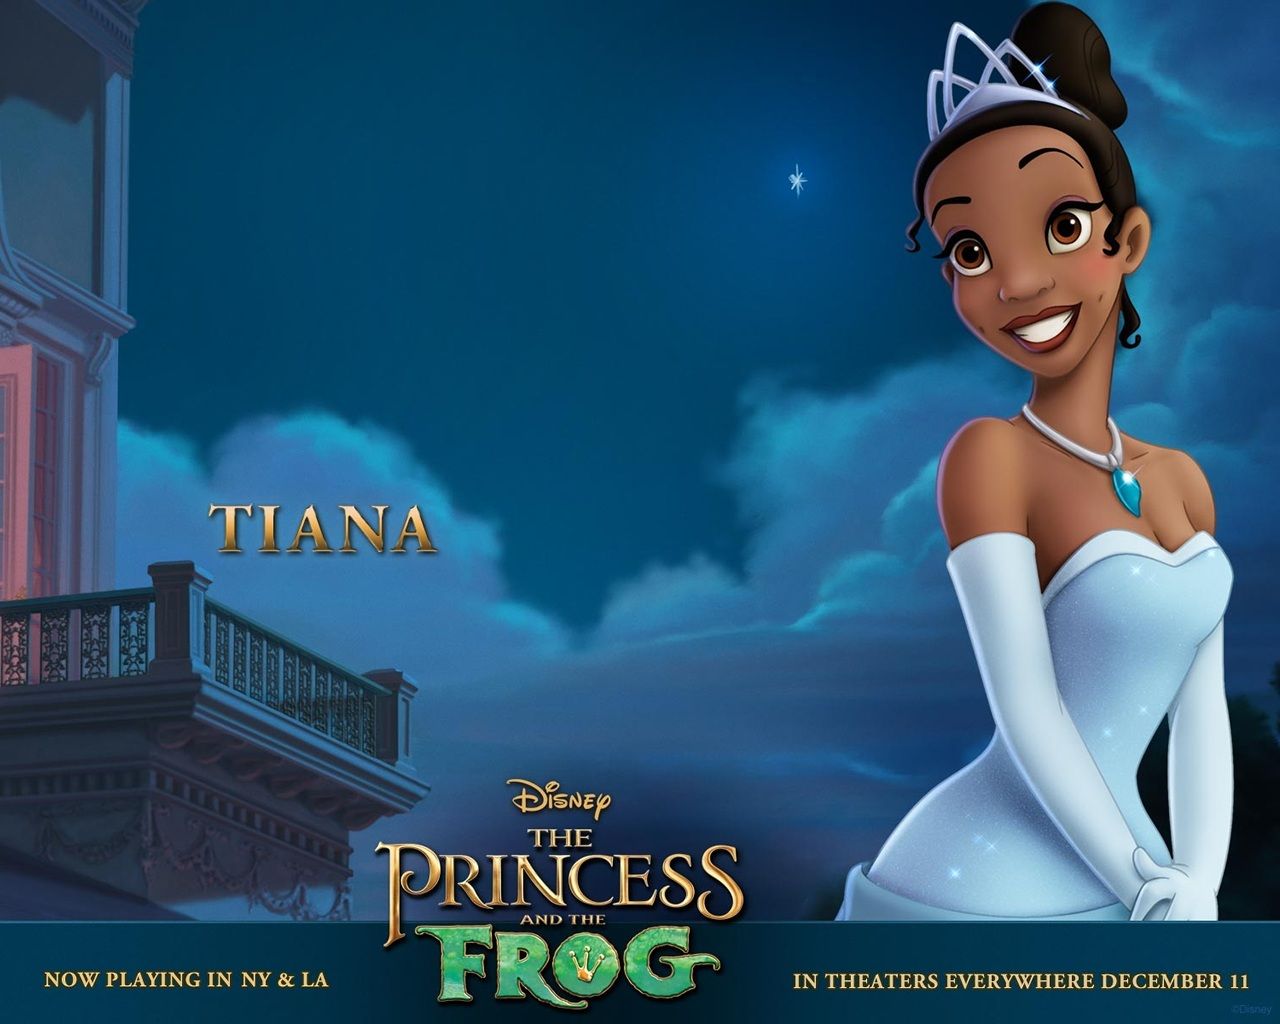 The Princess and the Frog Tiana Wallpaper 1280 x 1024 Pixels